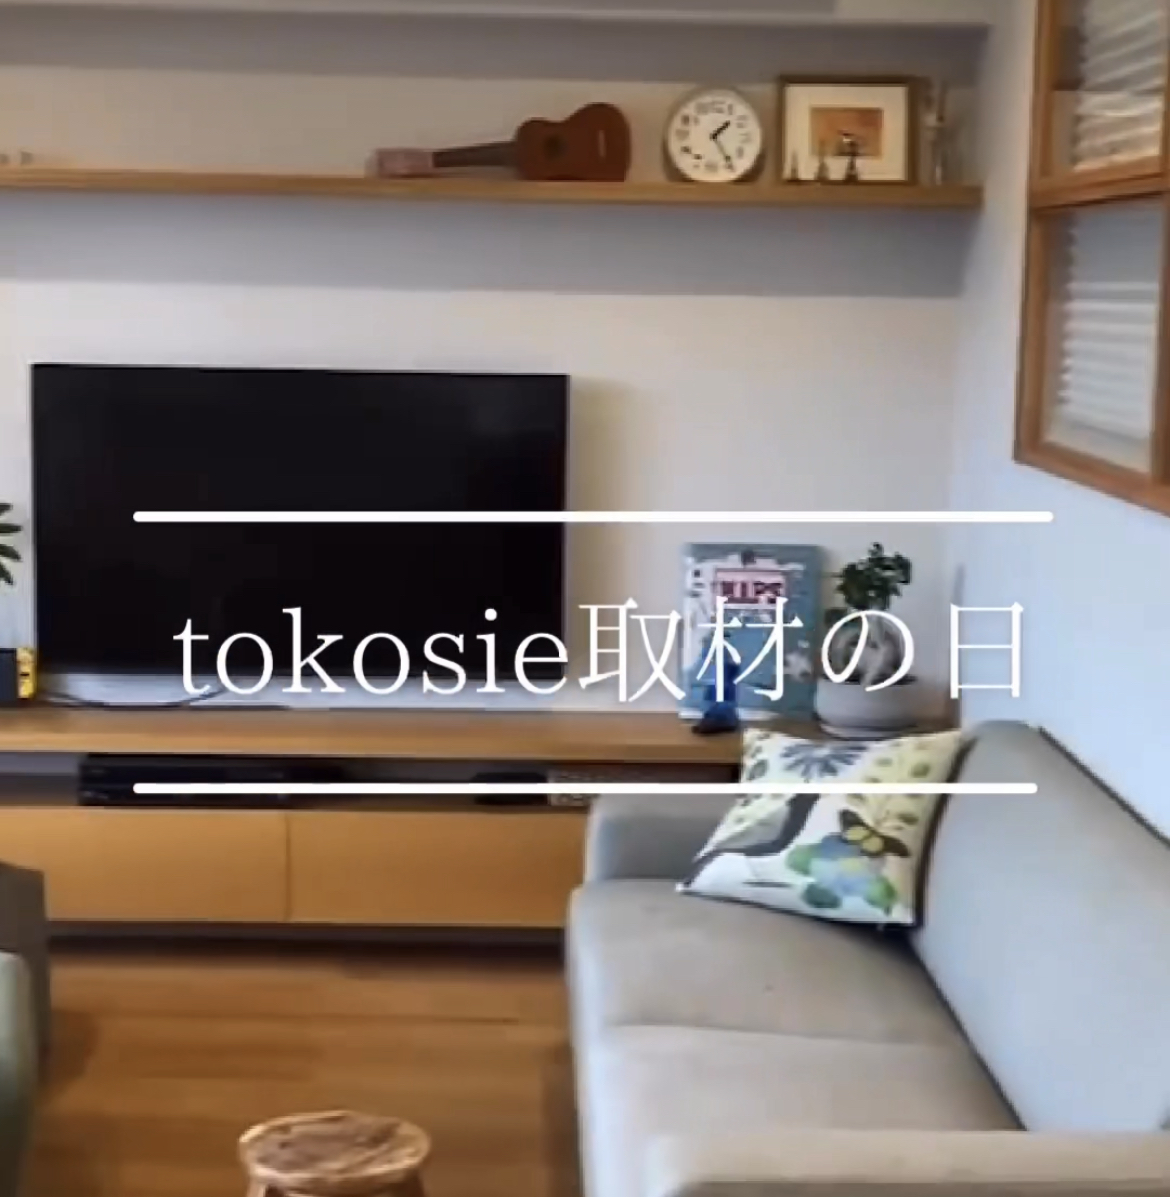 tokosieでスタッフ岡野の自宅、公開されました。